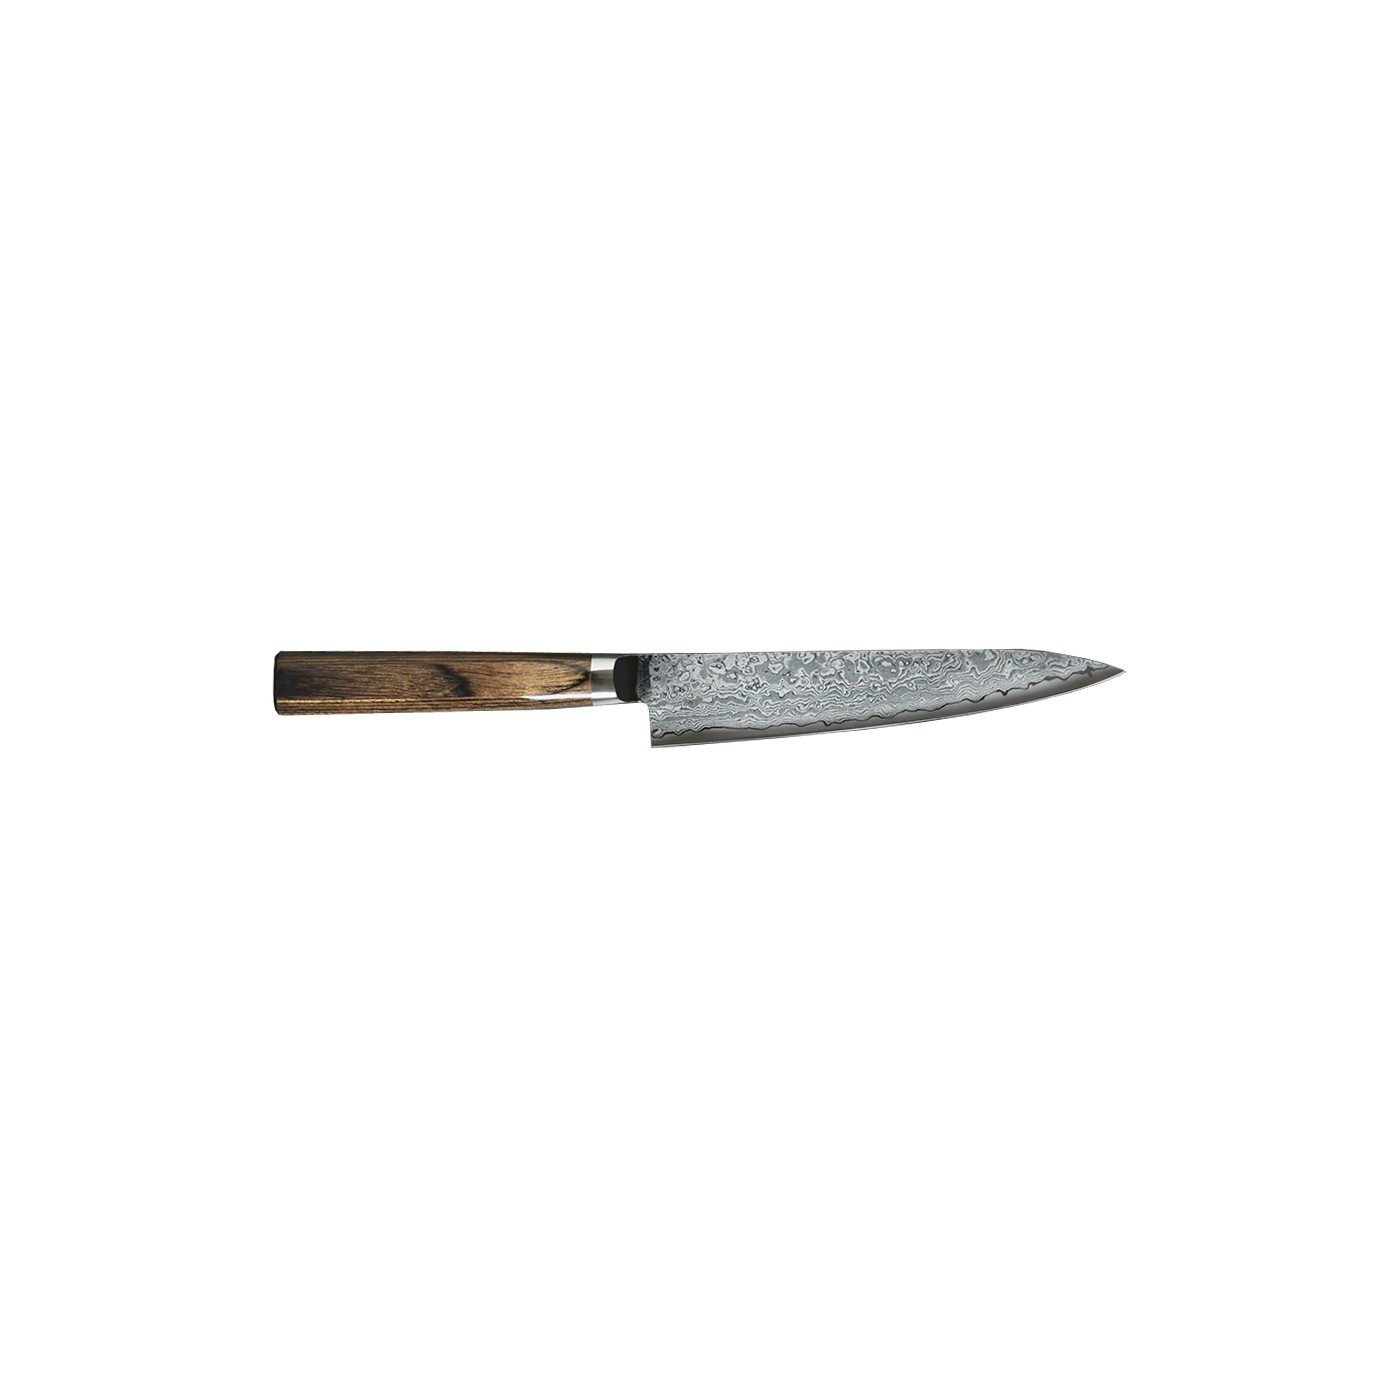 Couteau universel petty 15cm - Takamura TM10